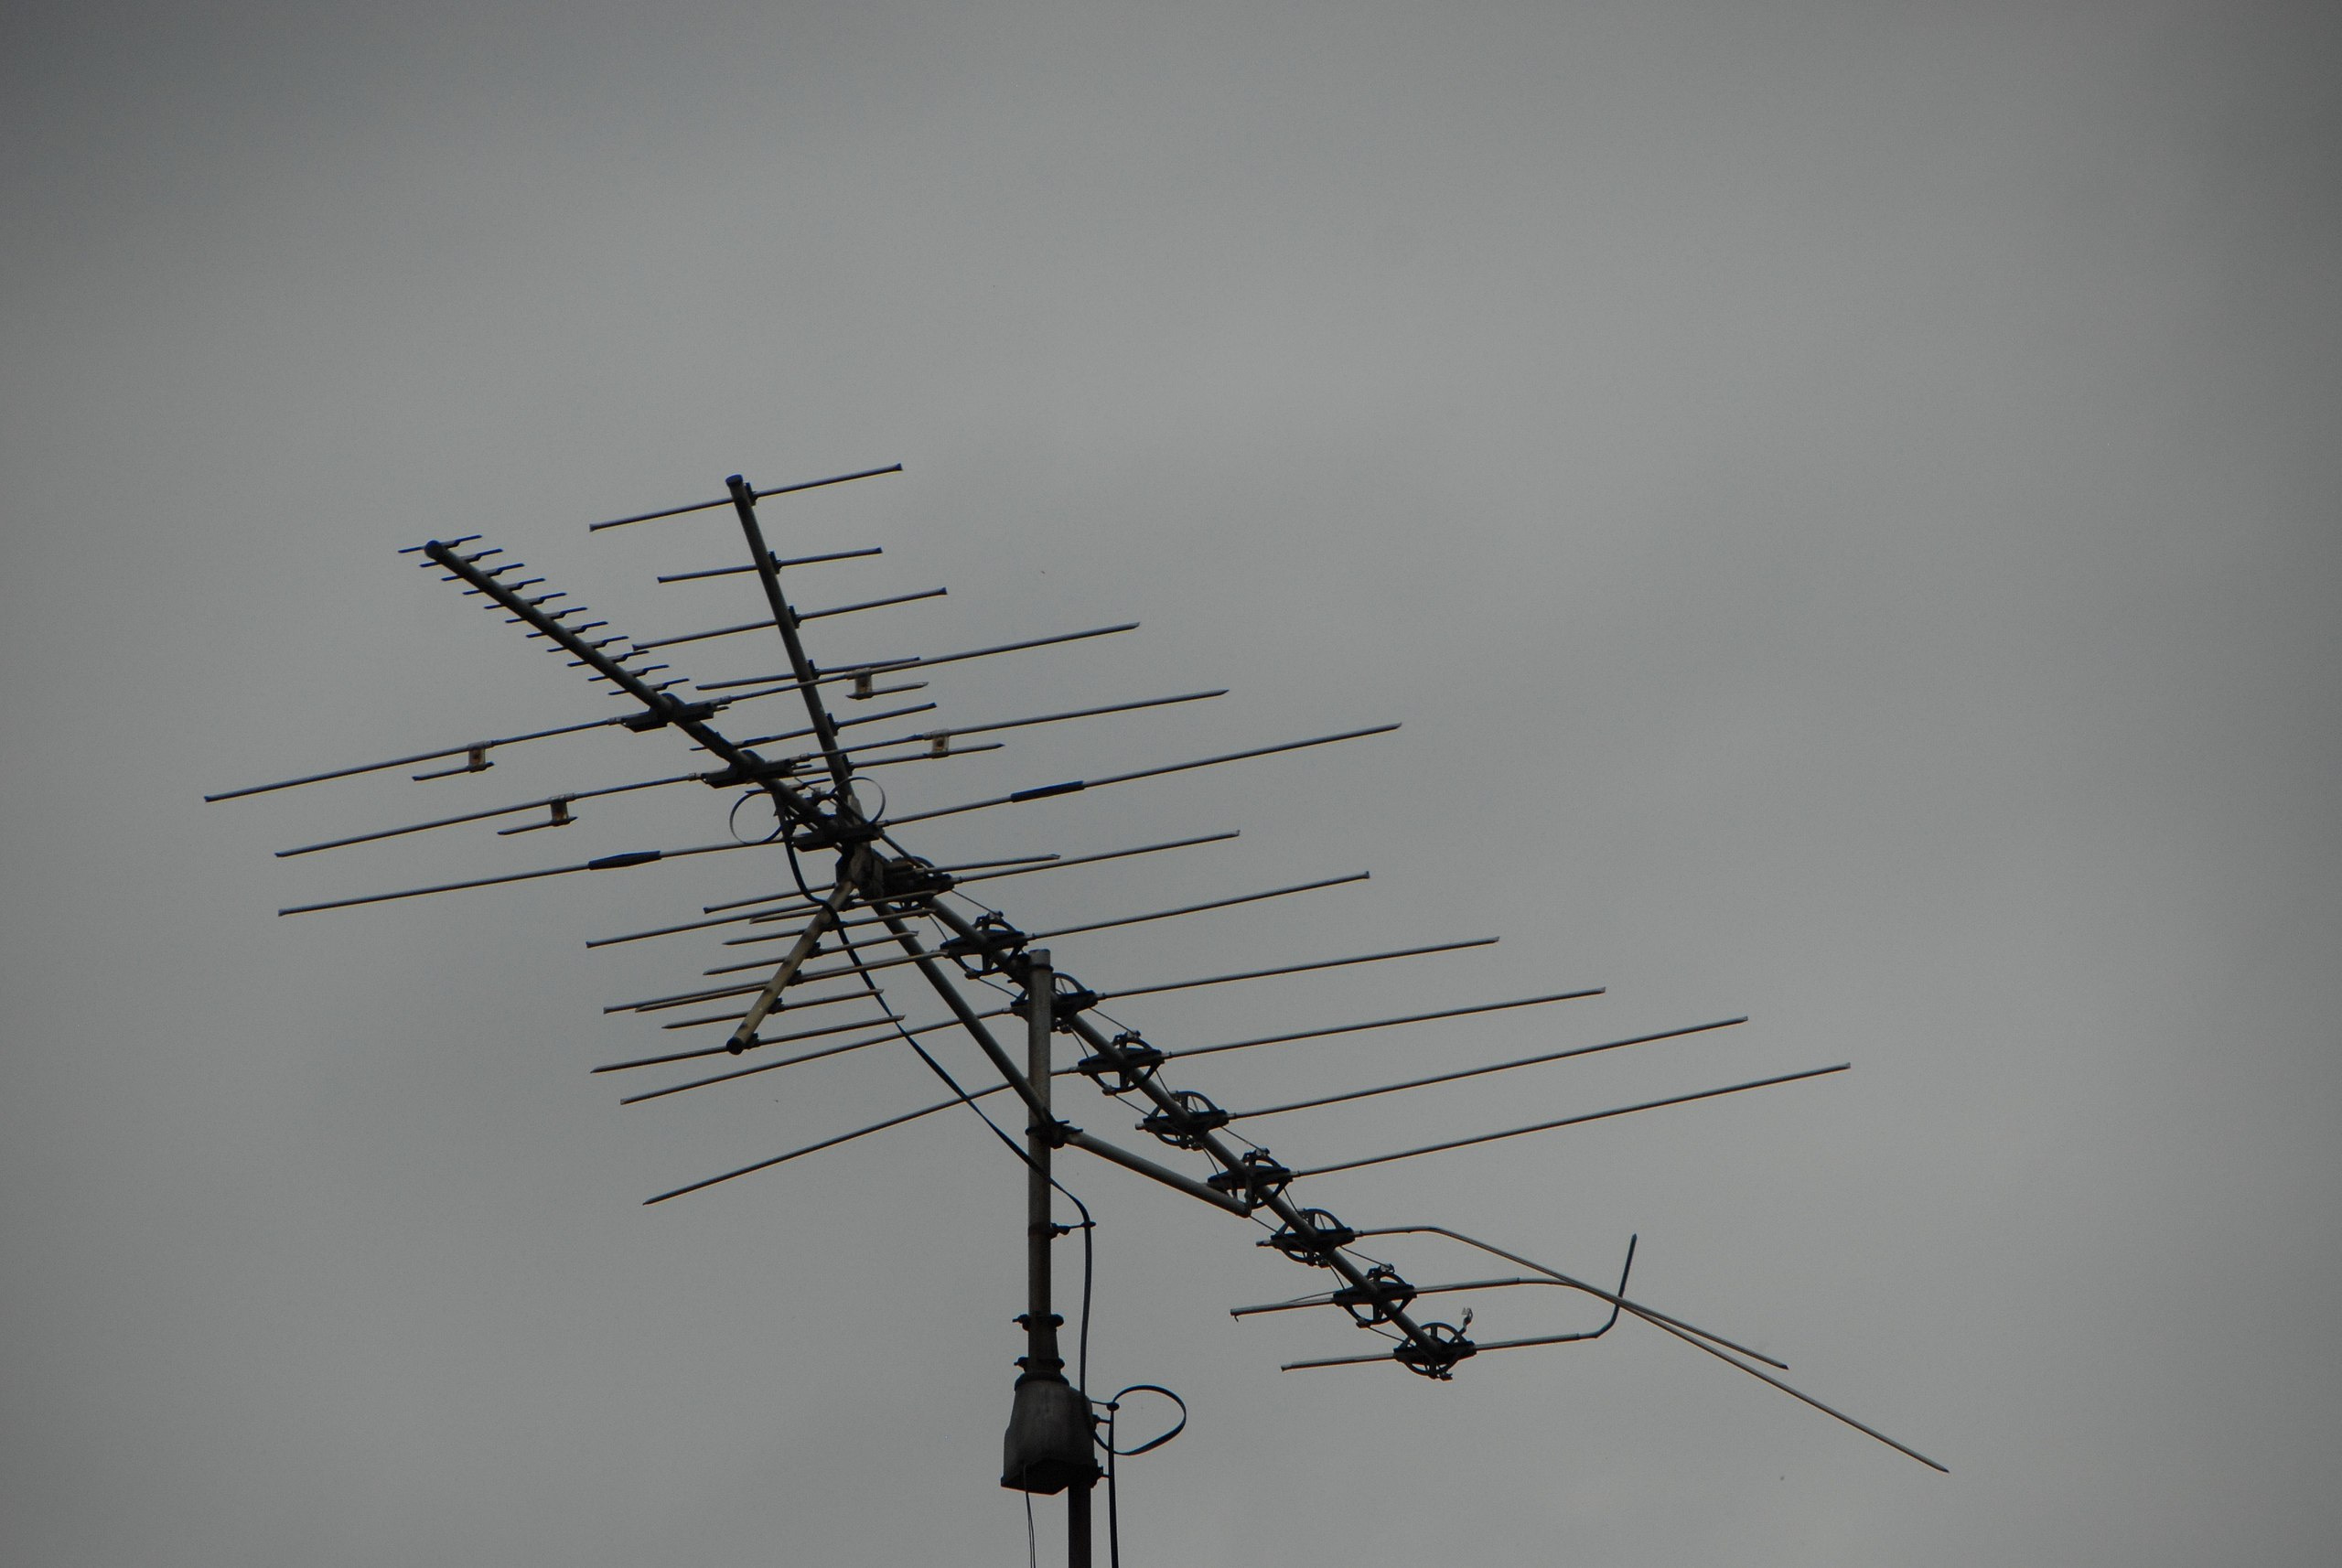 File:Old UHF-VHF television antenna.jpg - Wikimedia Commons